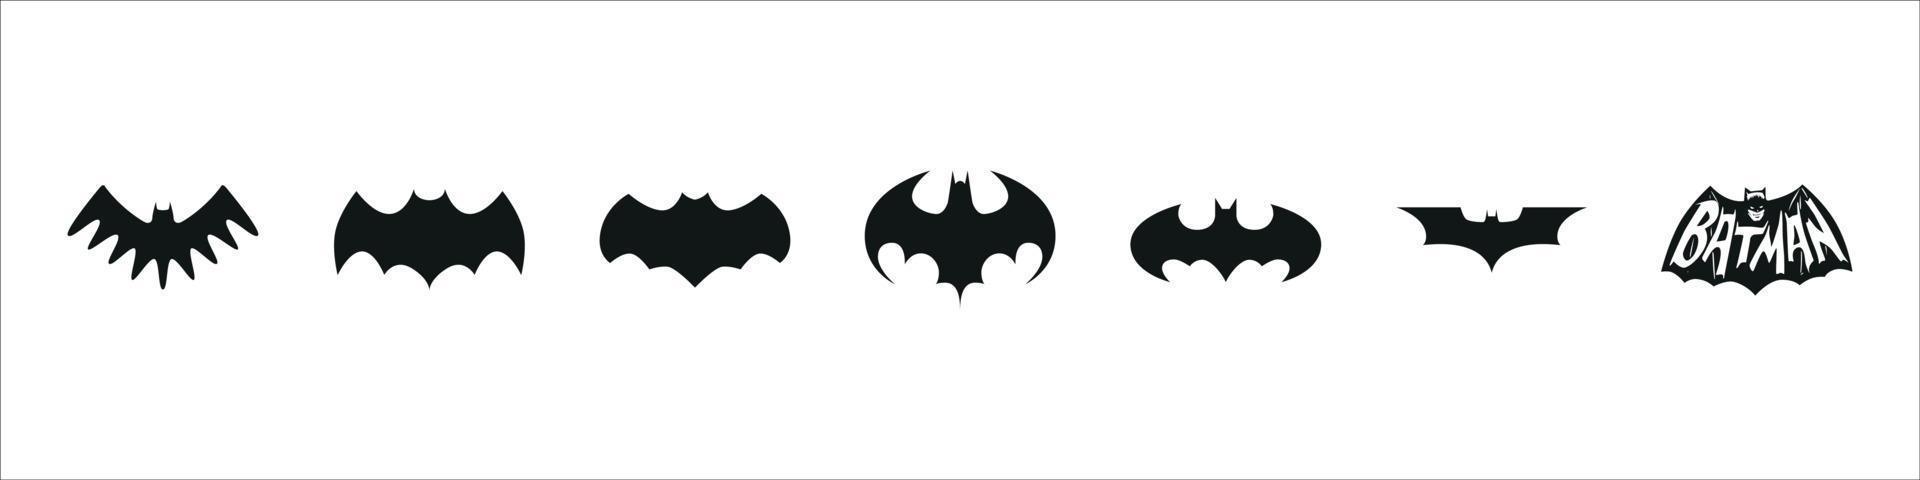 Bats Silhouettes Vector